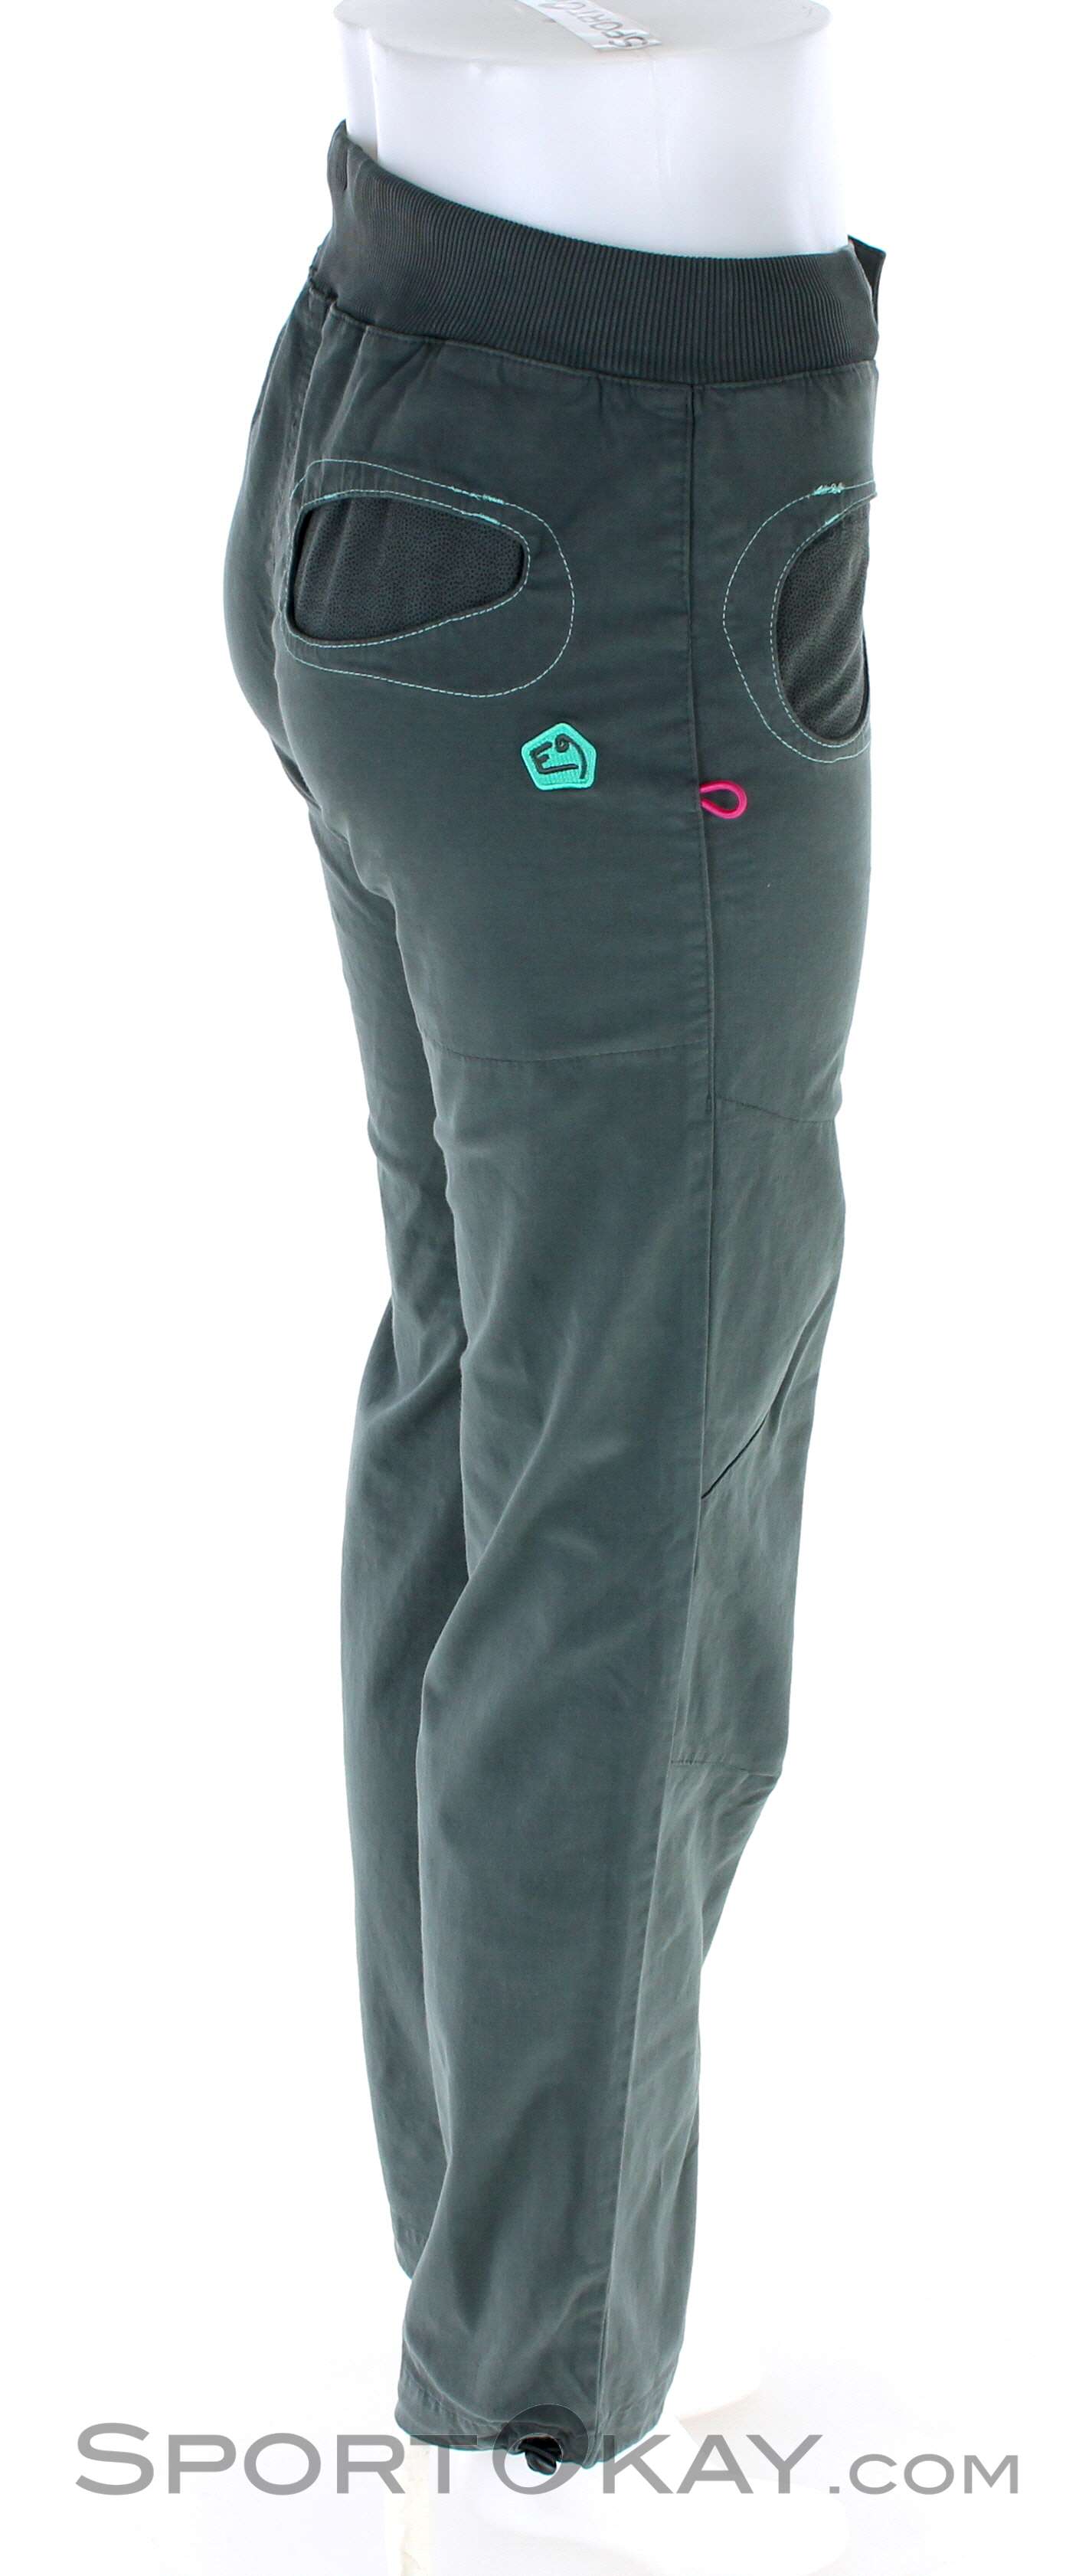 E9 Onda Slim 2 - Bouldering trousers Women's